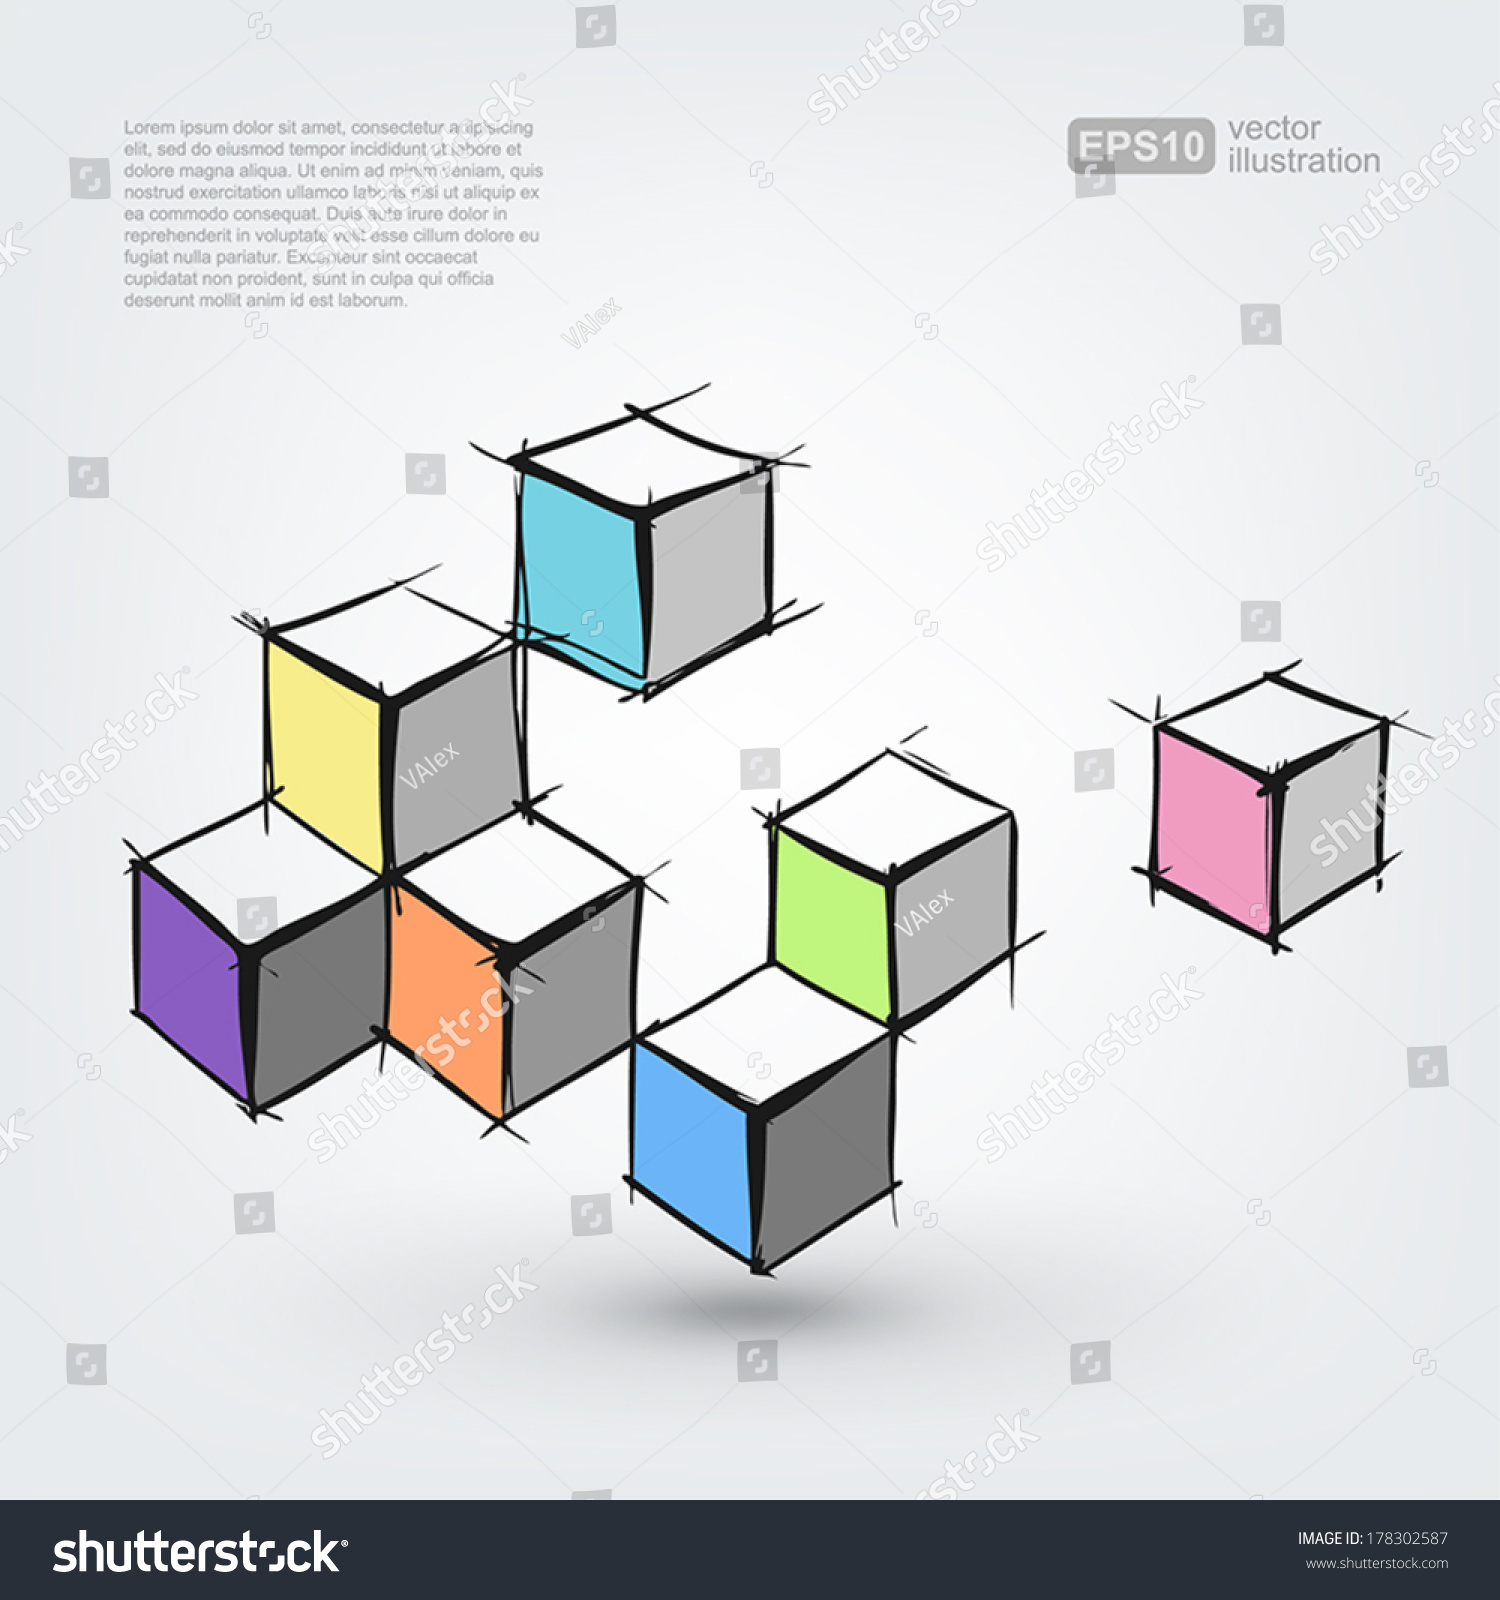 Vector Illustration Of 3d Cubes 178302587 Shutterstock